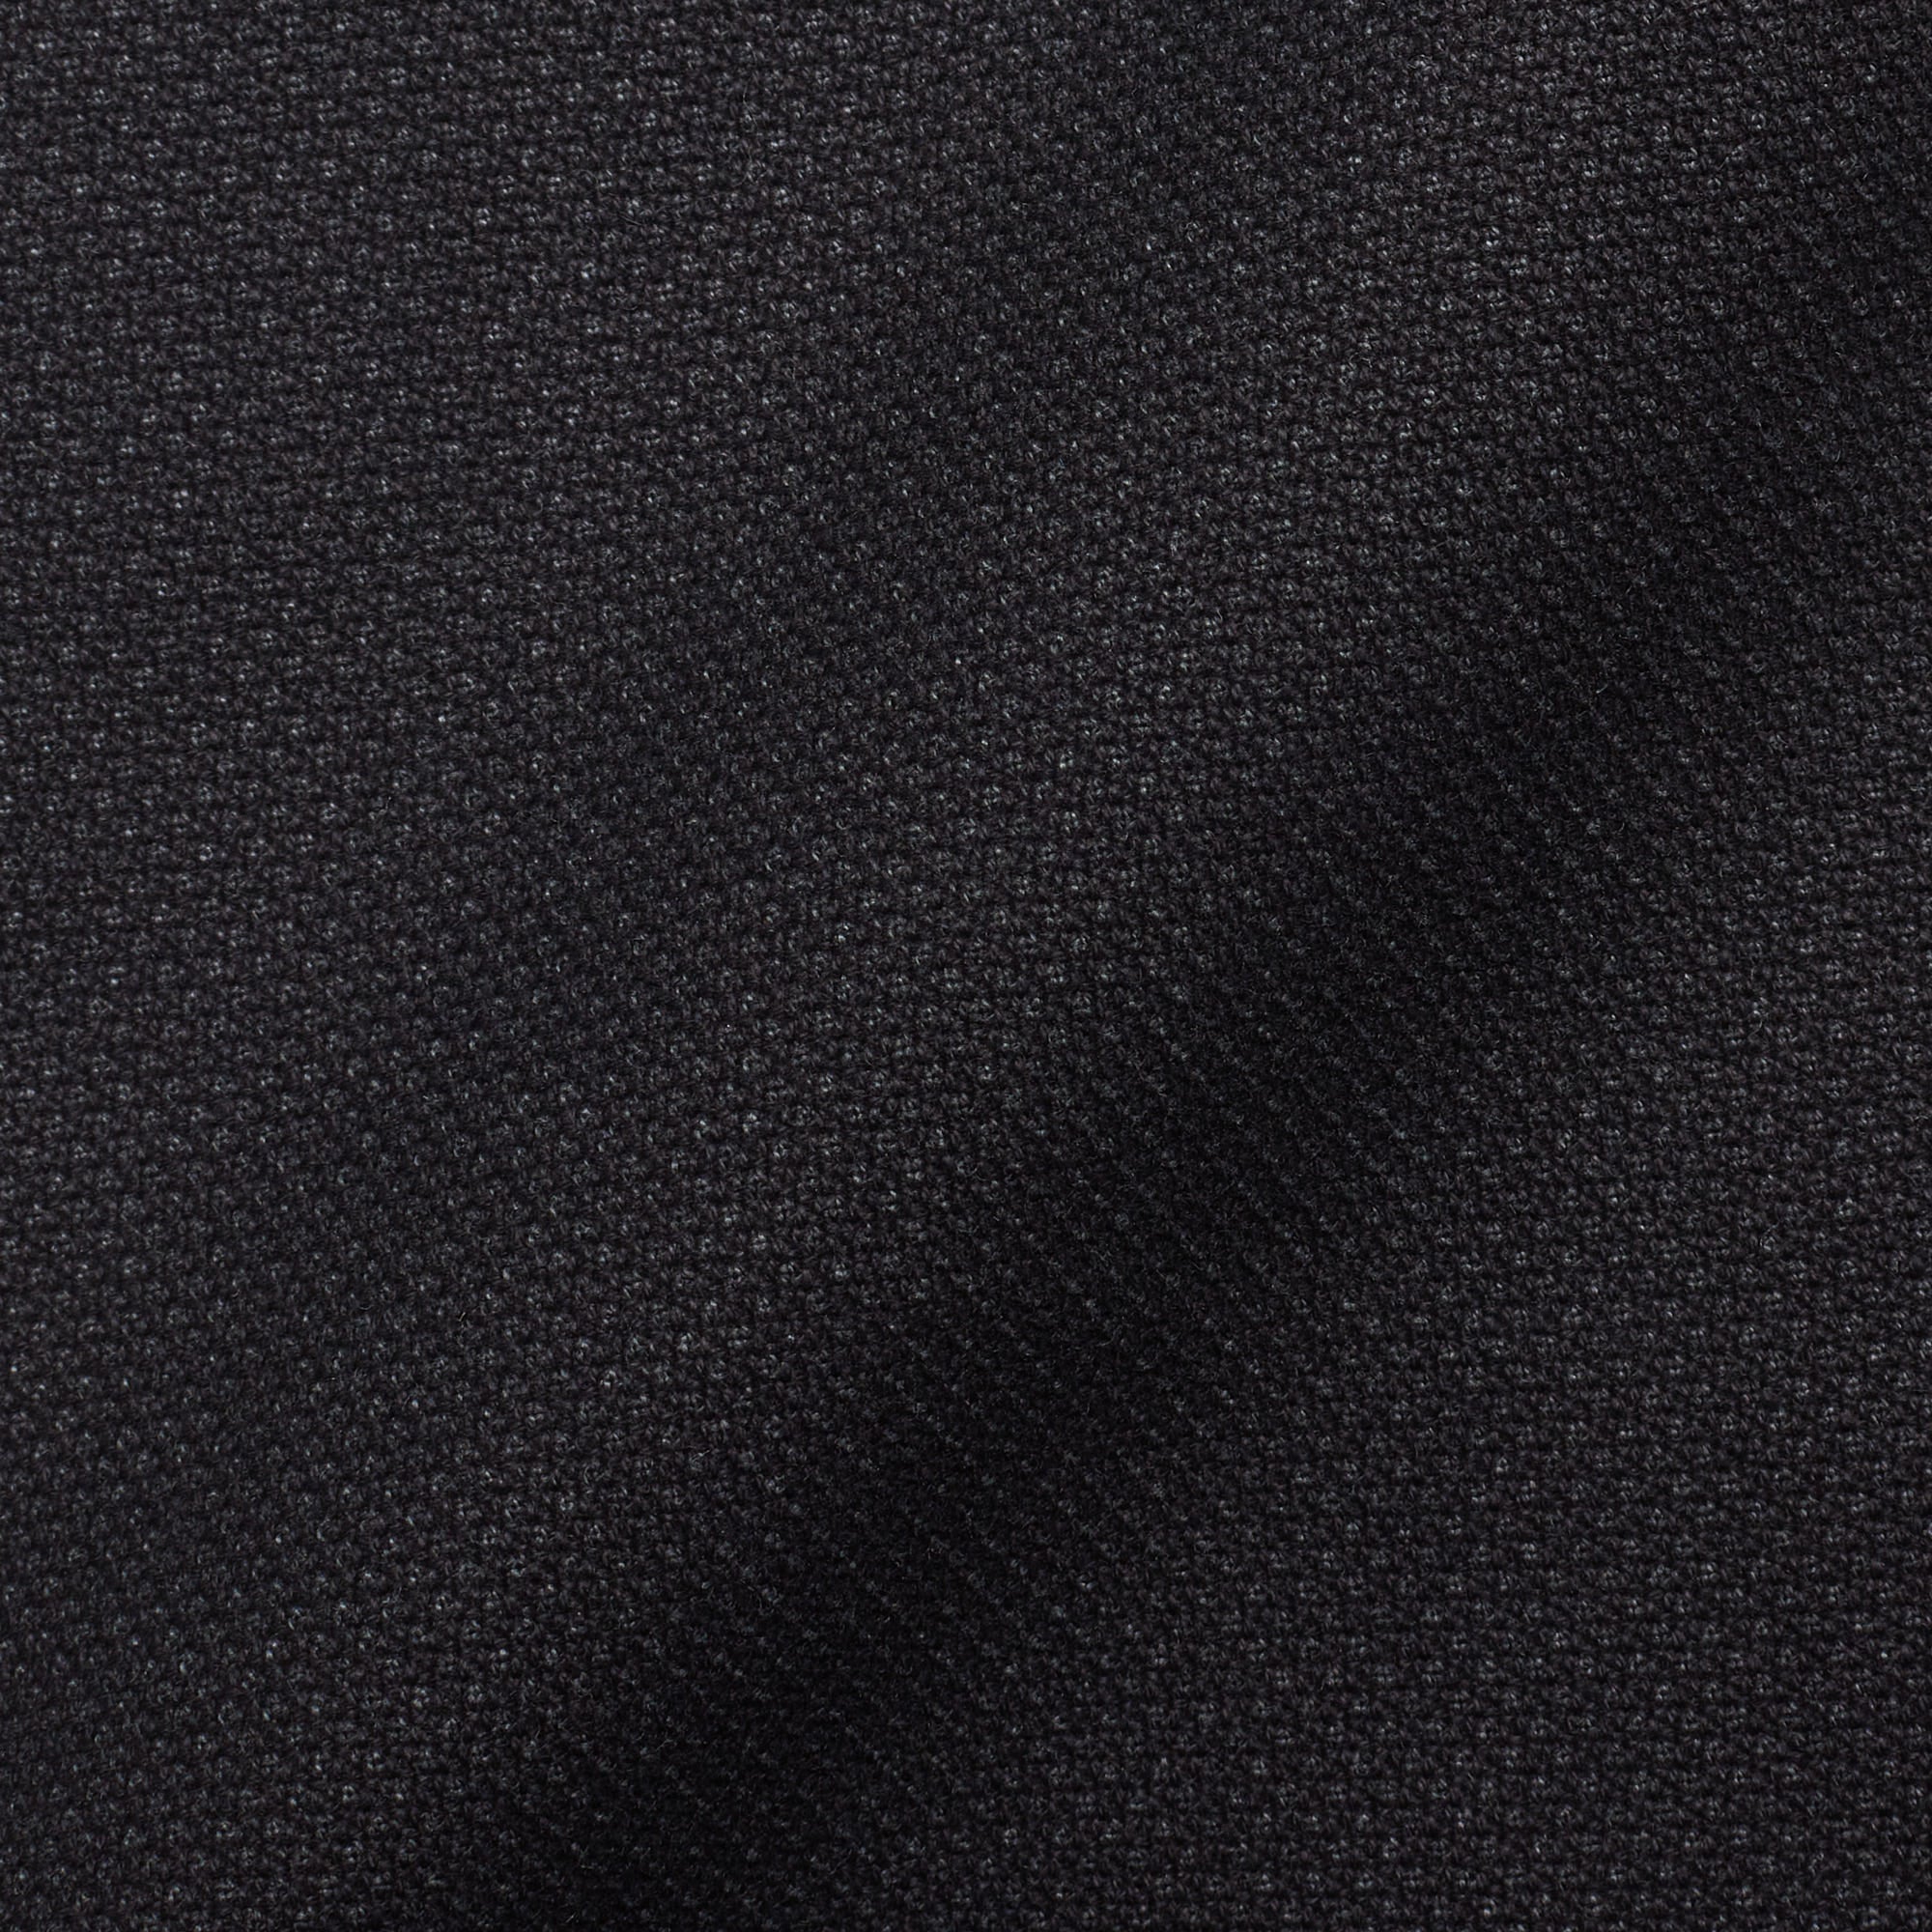 INCOTEX (Slowear) Dark Gray Birdseye Cotton Flat Front Pants 54 NEW US 38 Slim INCOTEX